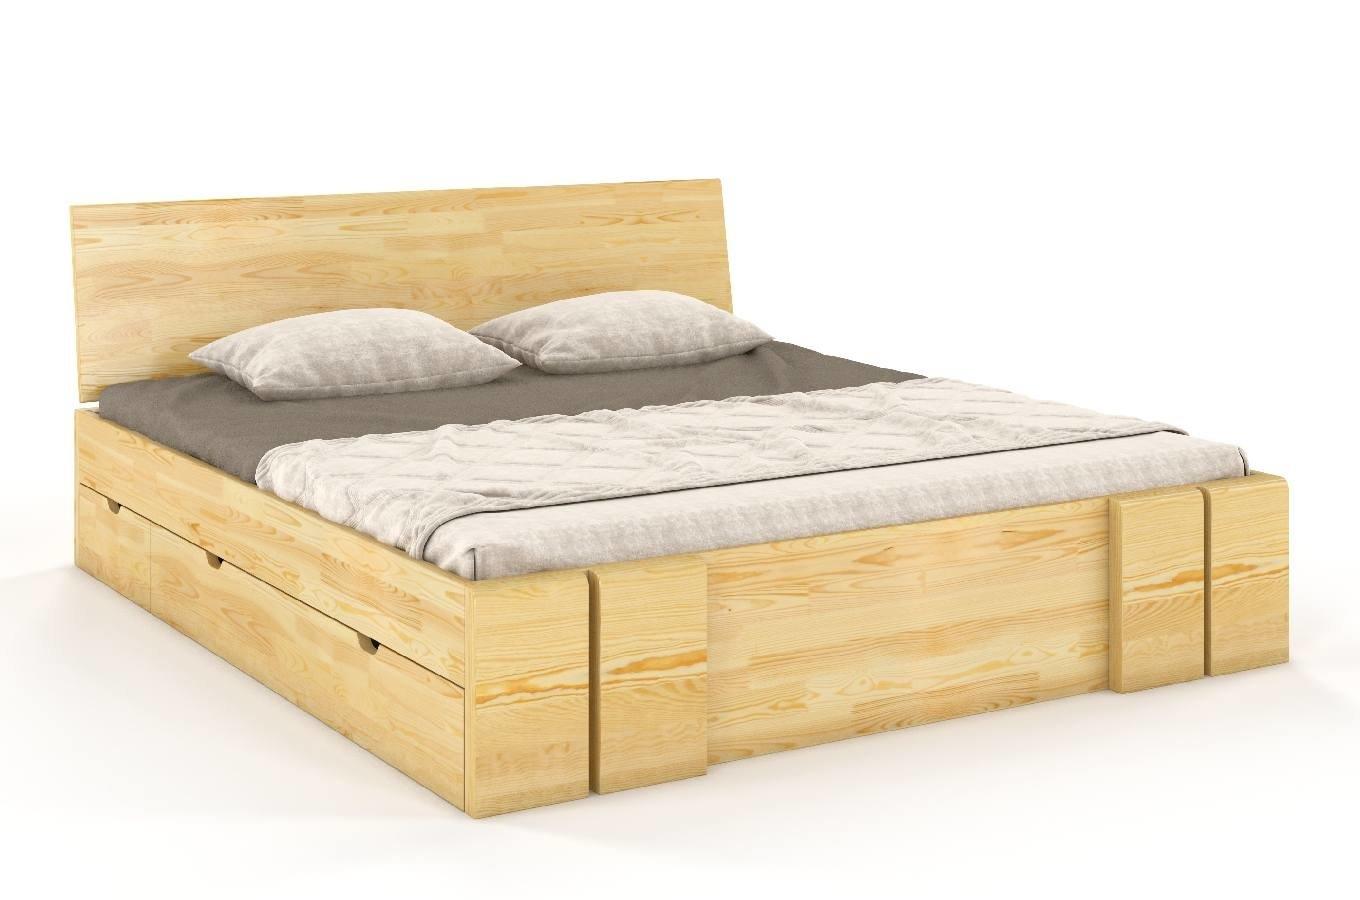 Łóżko drewniane sosnowe z szufladami Skandica VESTRE Maxi & DR / 200x200 cm, kolor naturalny